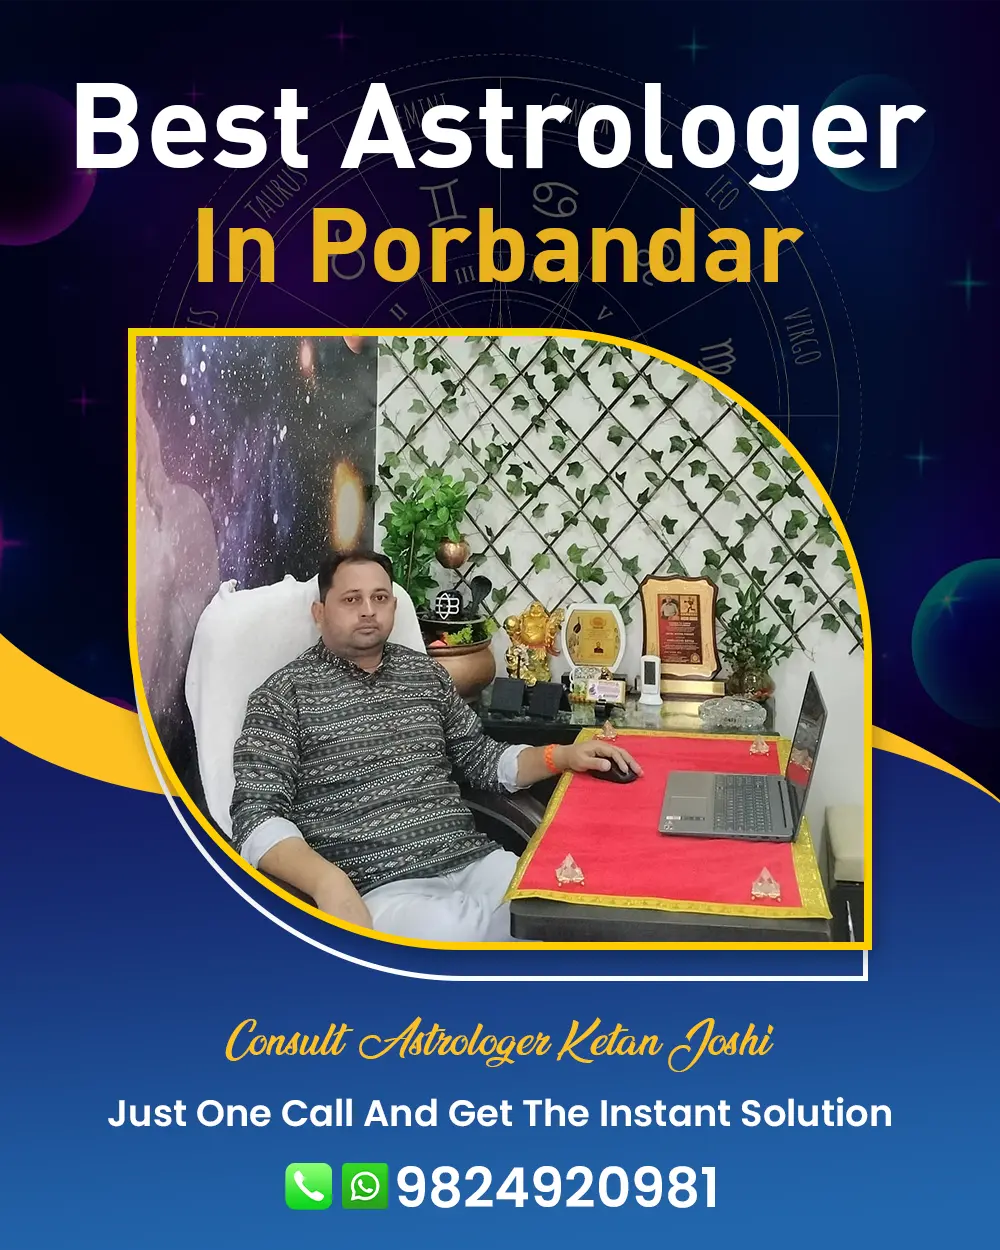 Best Astrologer In Porbandar